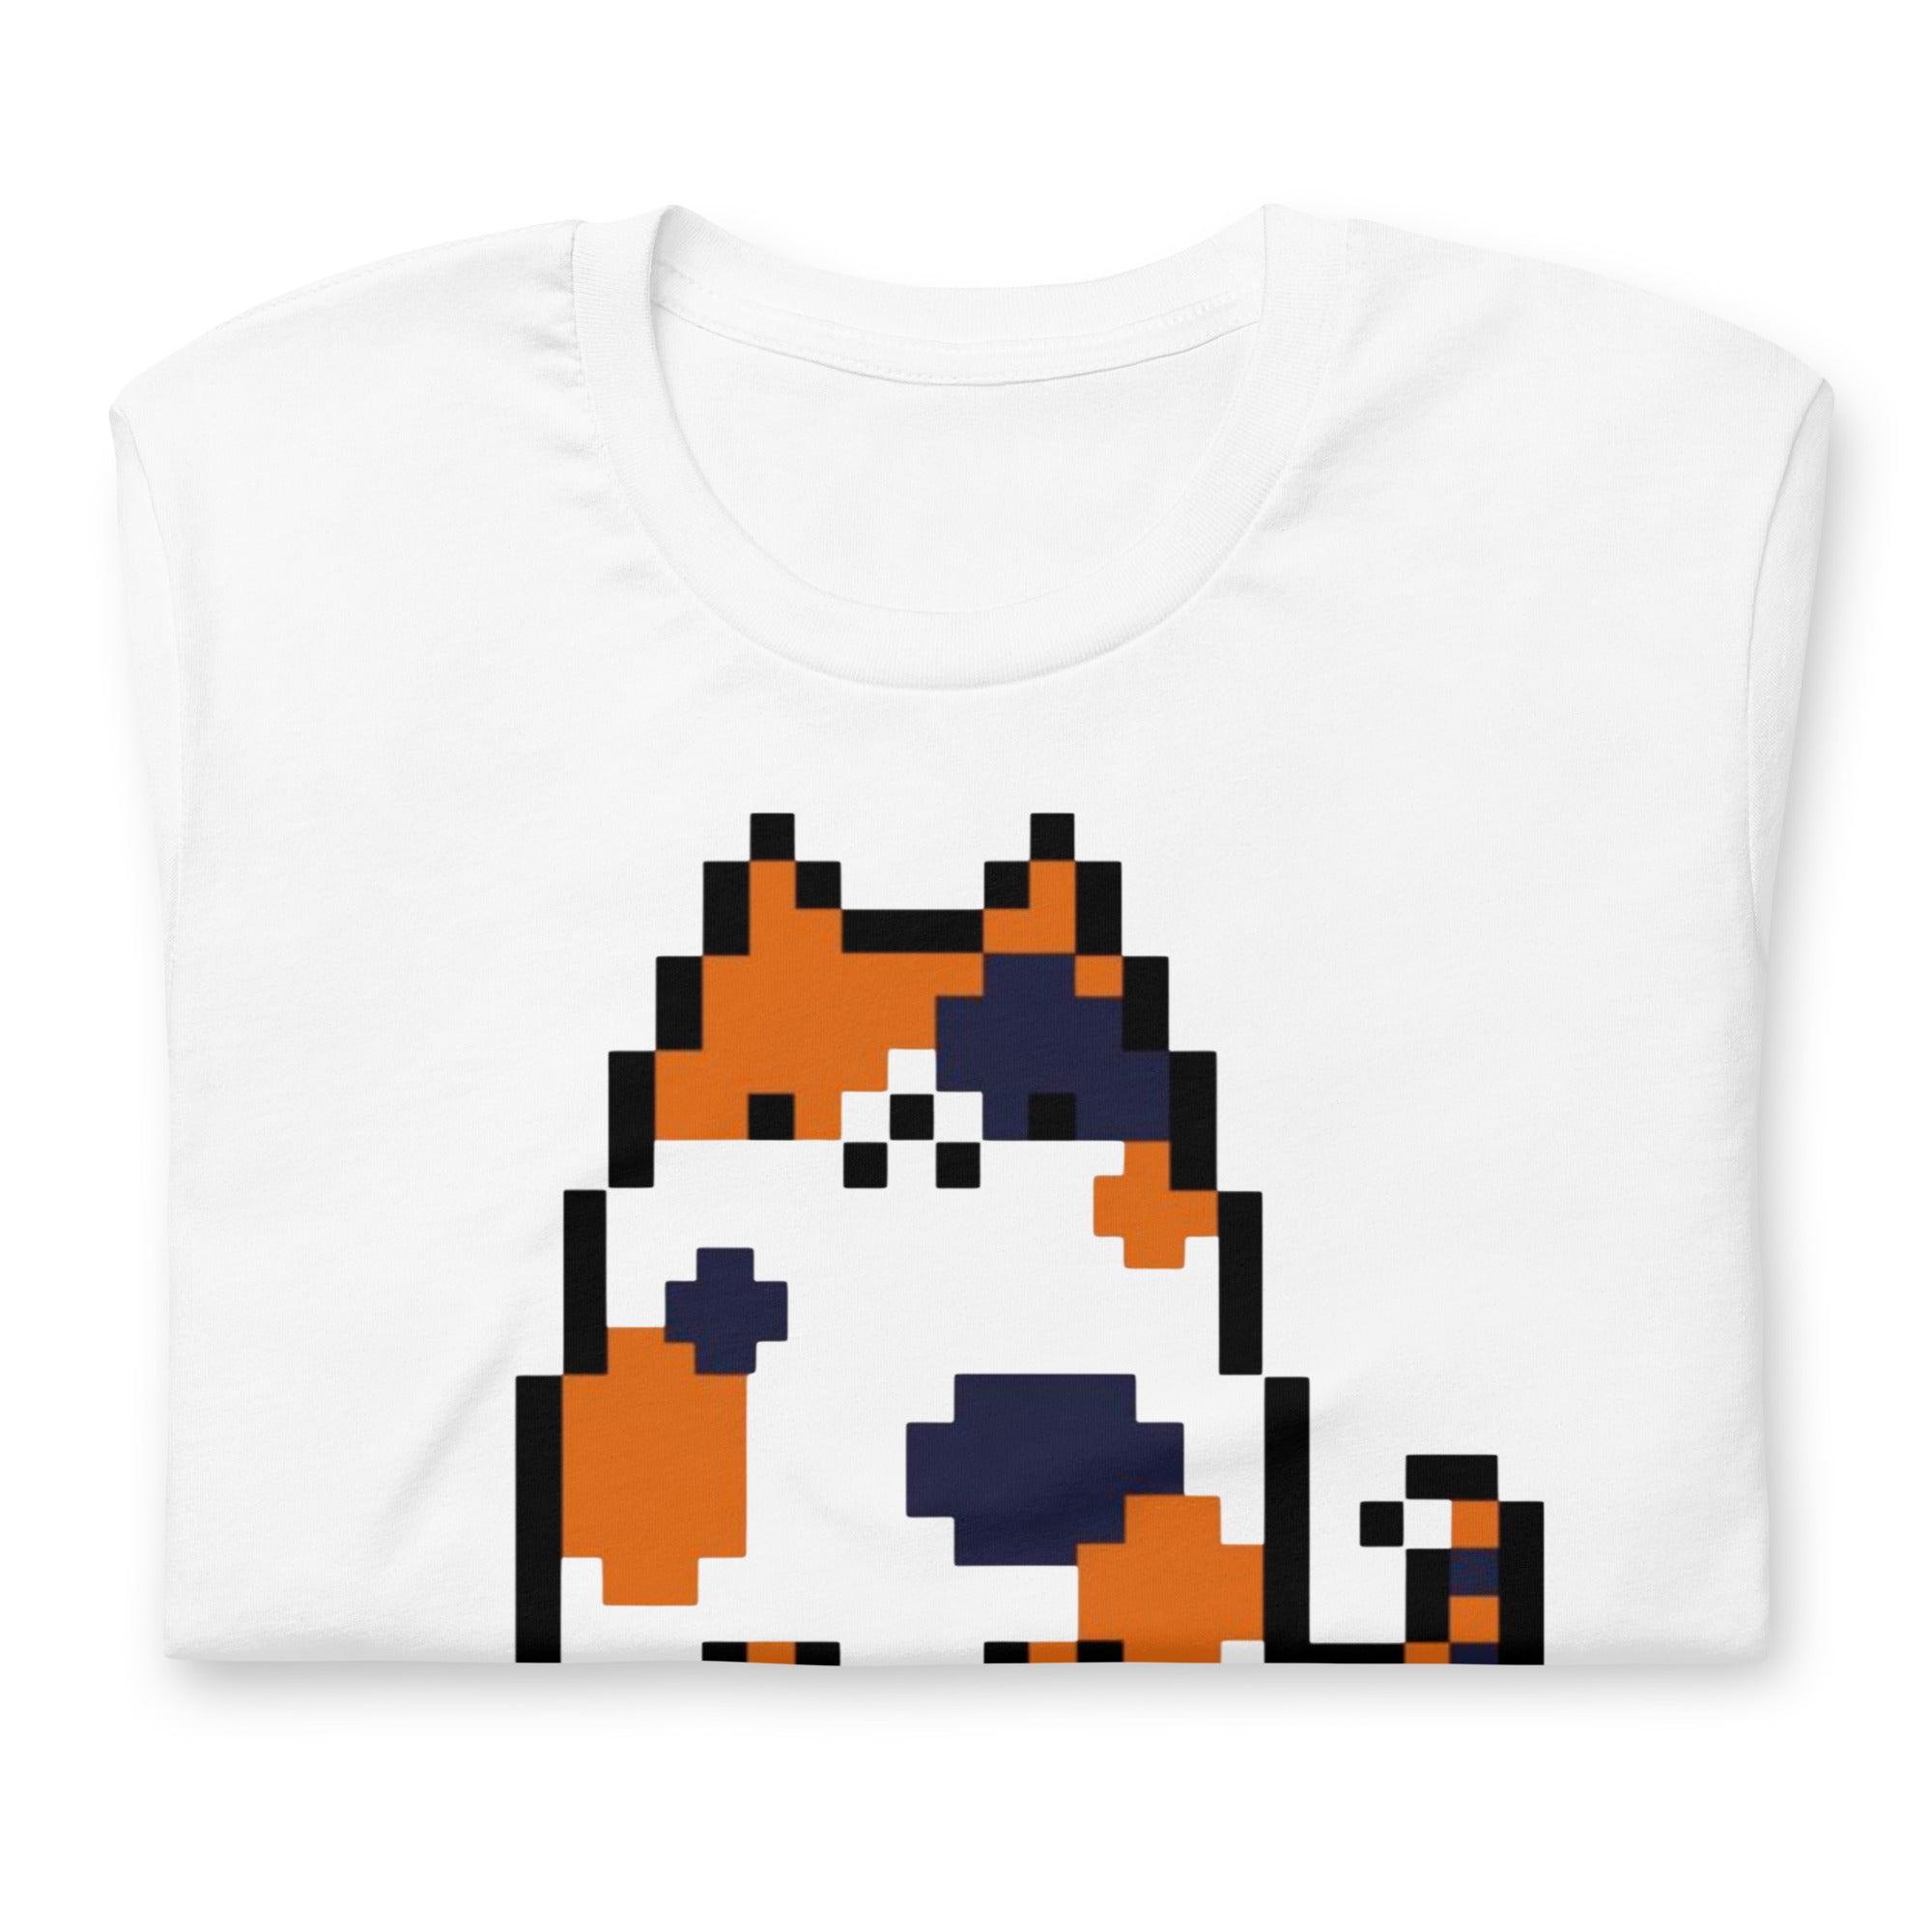 Calico cat shirt